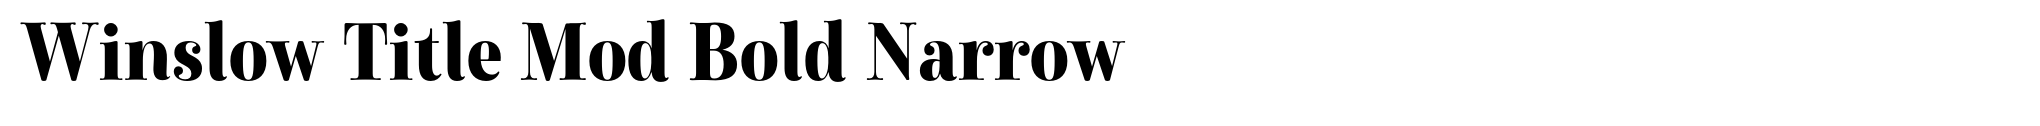 Winslow Title Mod Bold Narrow image